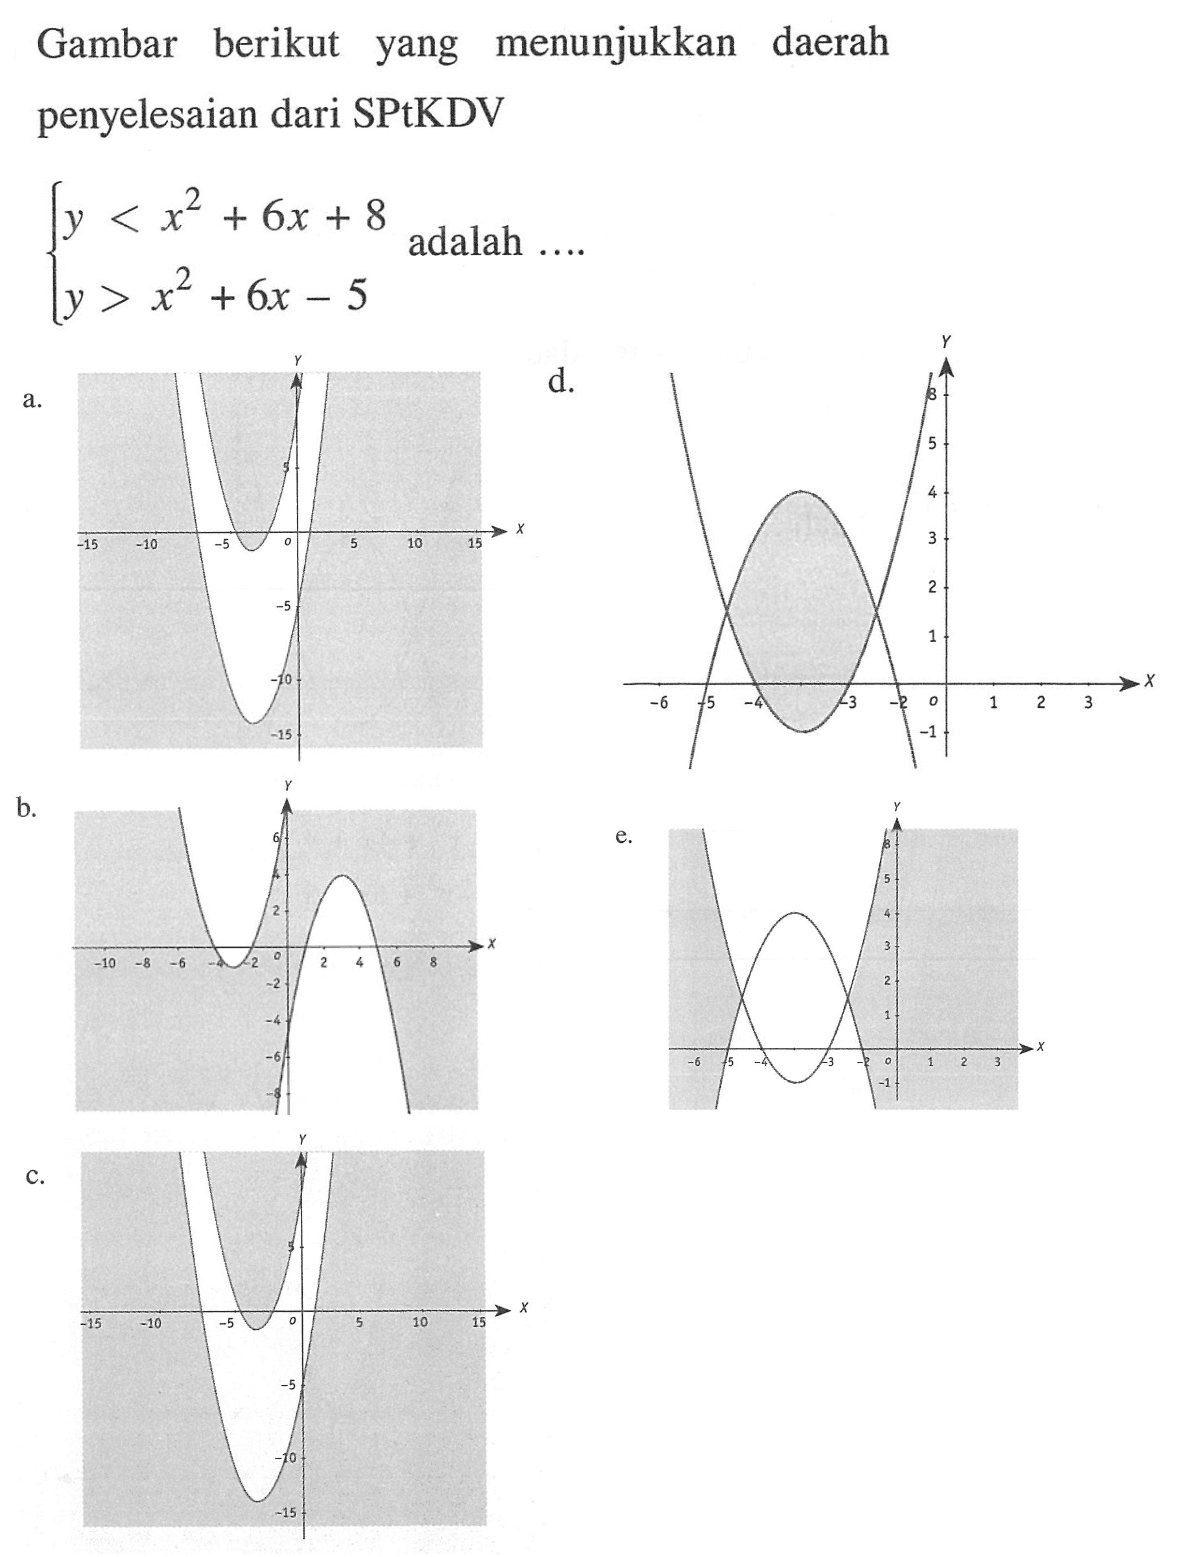 Gambar berikut menunjukkan yang daerah penyelesaian dari SPtKDV y<x^2+6x+8 y>x^2+6x-5 adalah ....